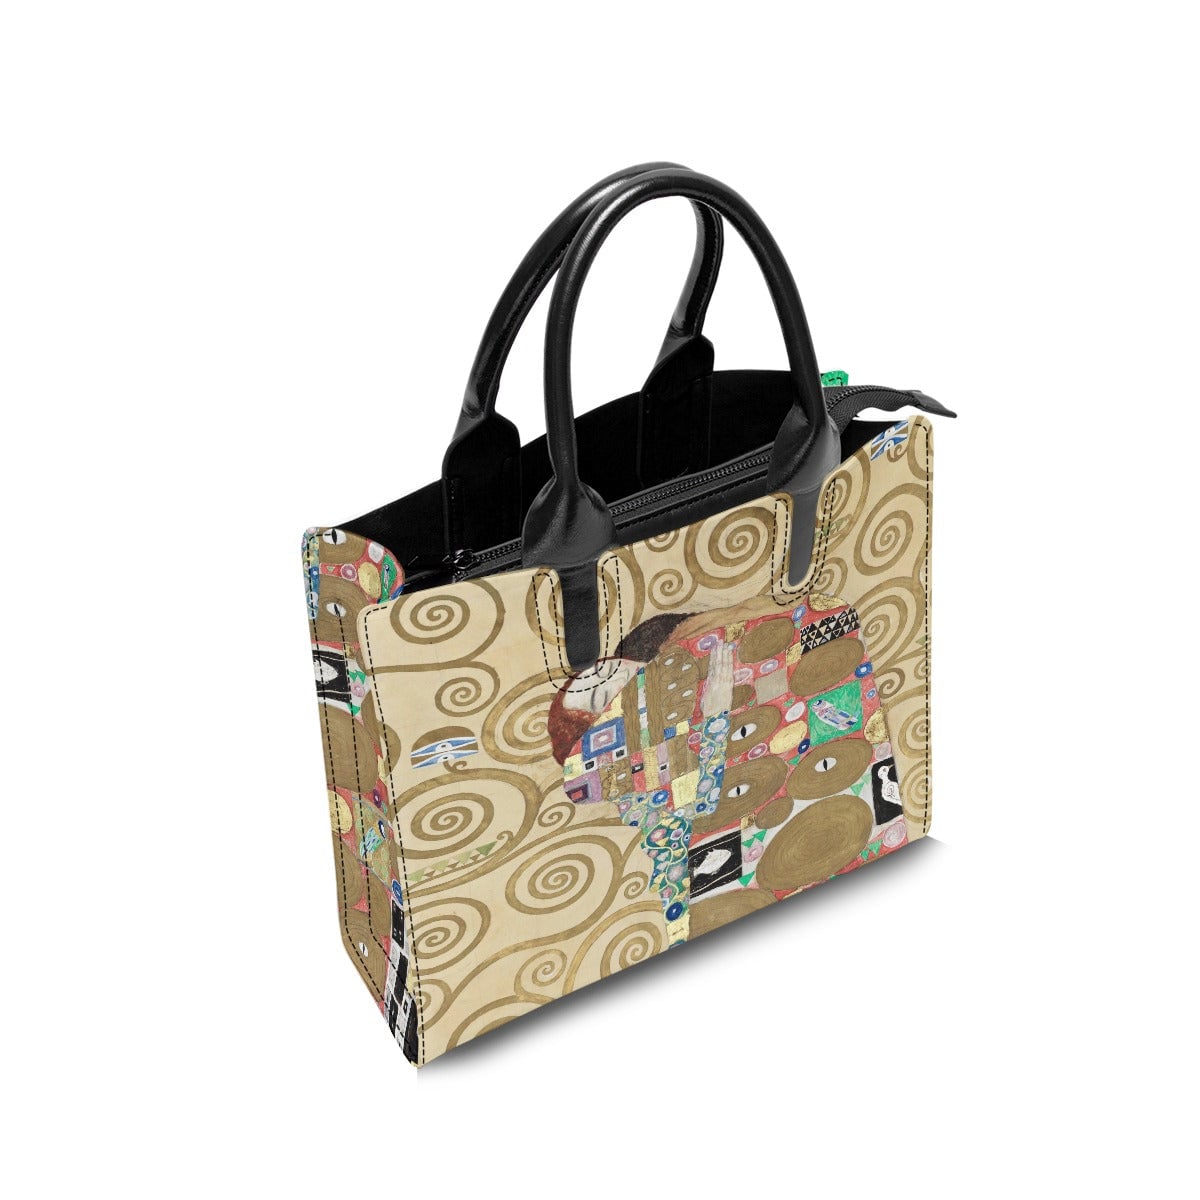 Fulfillment Gustav Klimt Painting Fashion Handbag